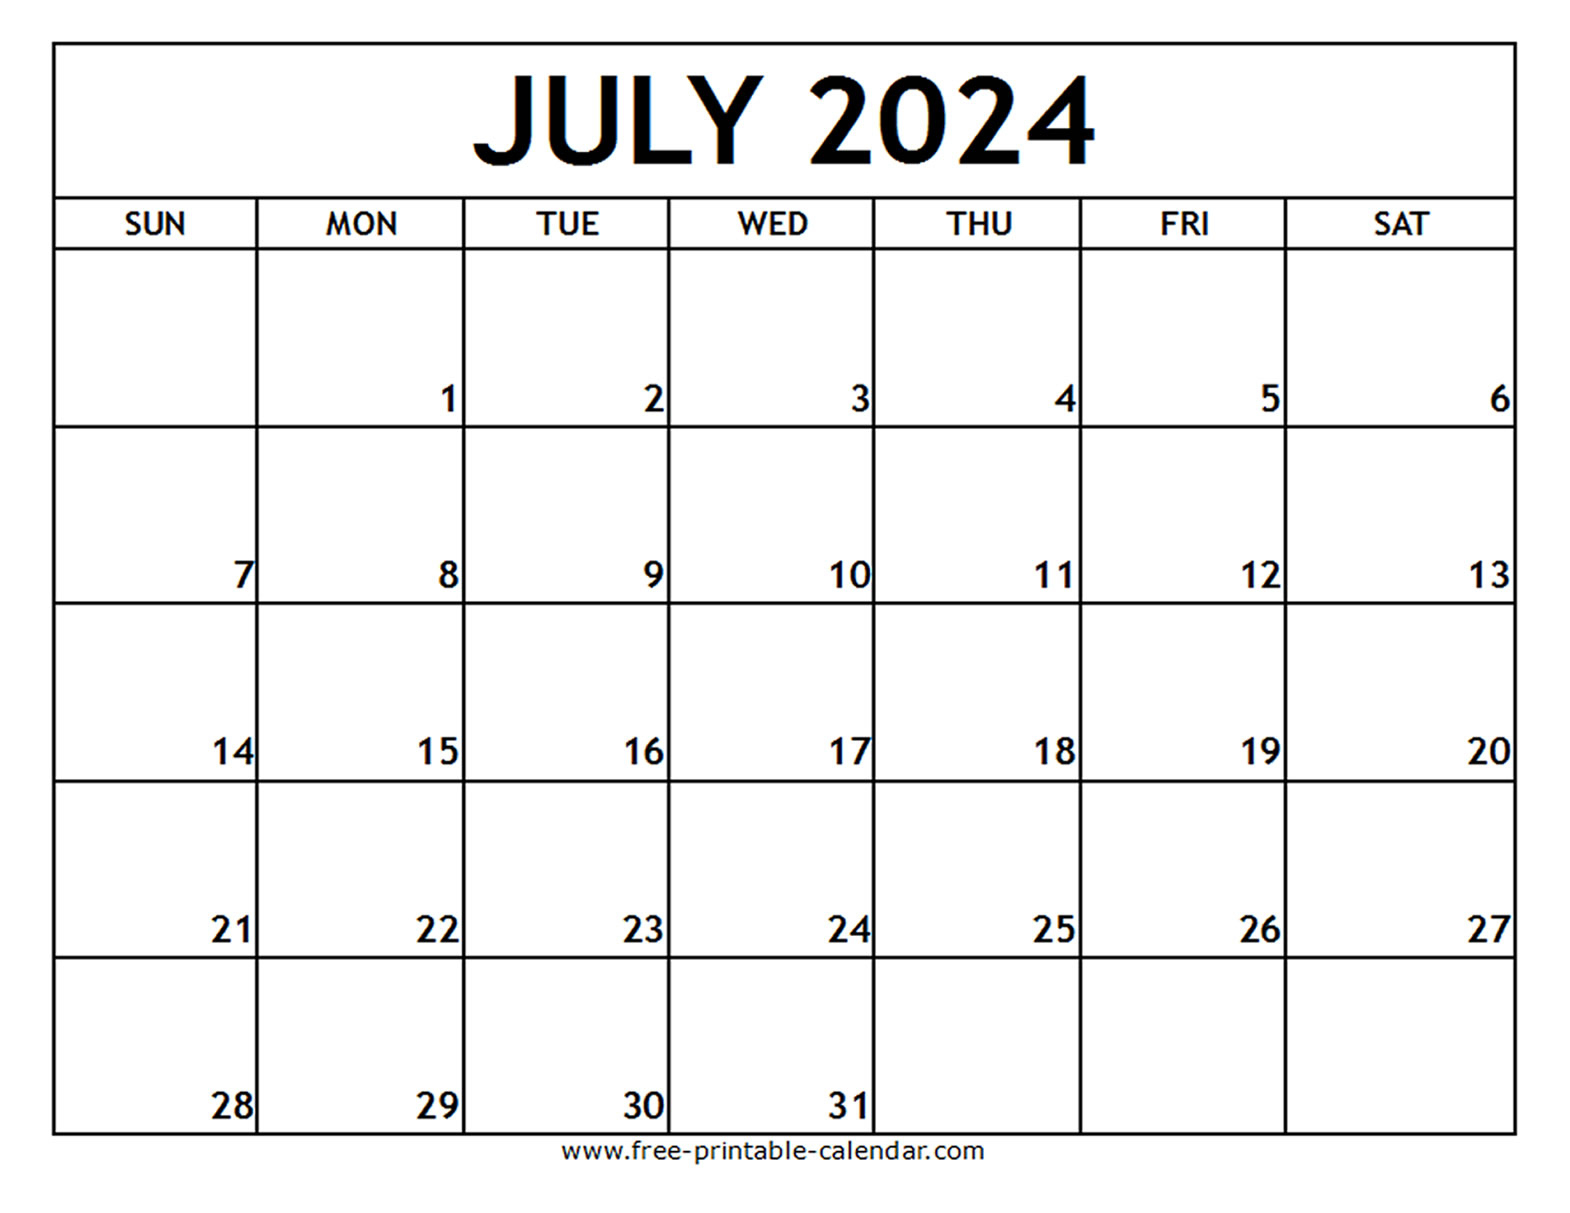 July 2024 Printable Calendar - Free-Printable-Calendar | Free Printable July 2024 Monthly Calendar